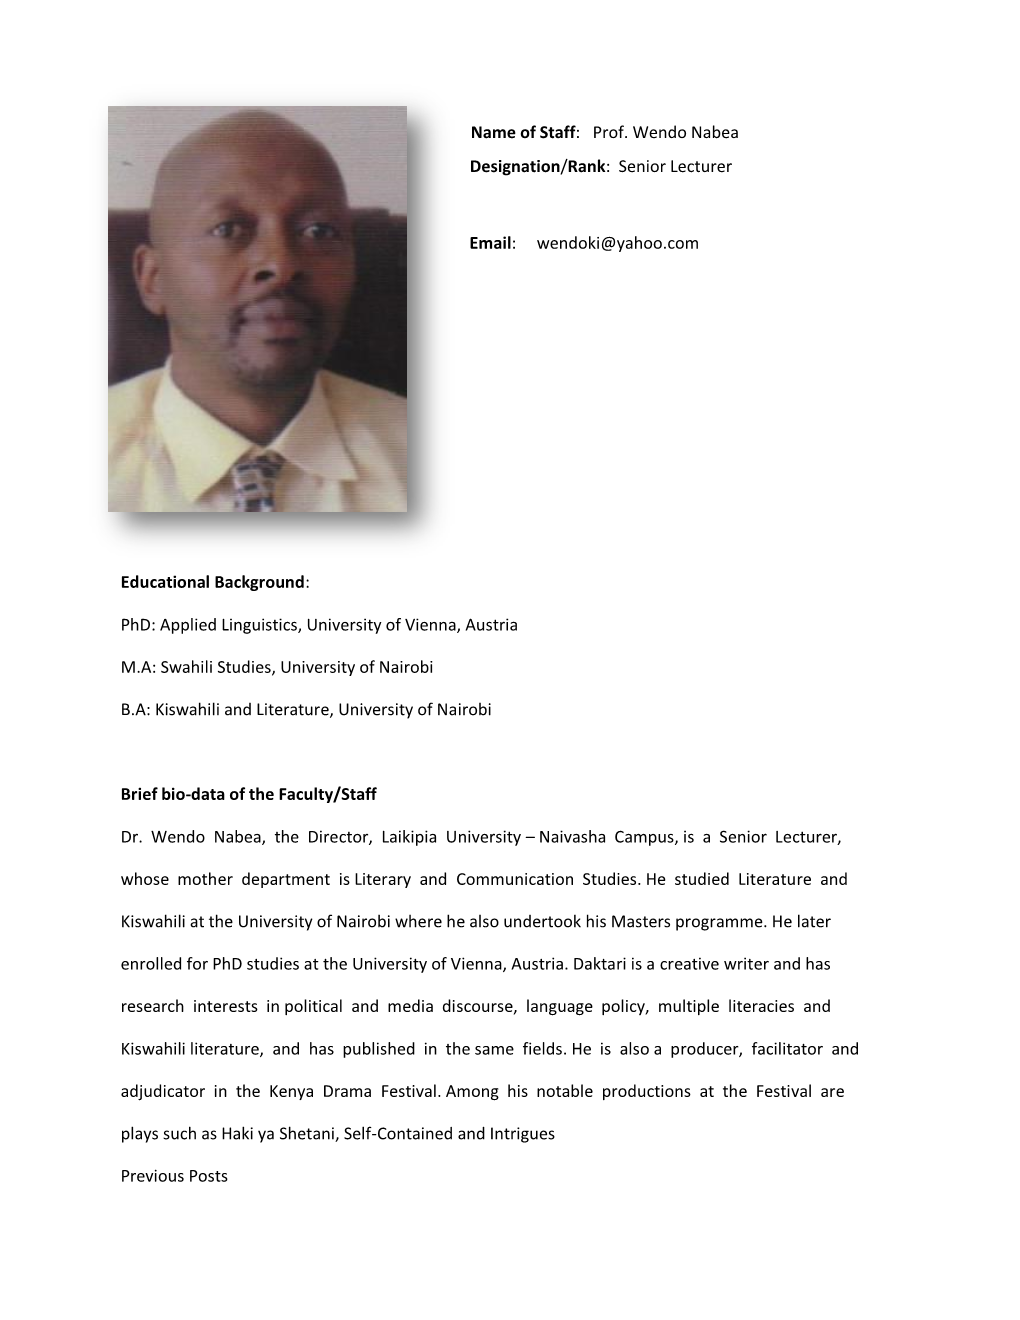 Name of Staff: Prof. Wendo Nabea Designation/Rank: Senior Lecturer